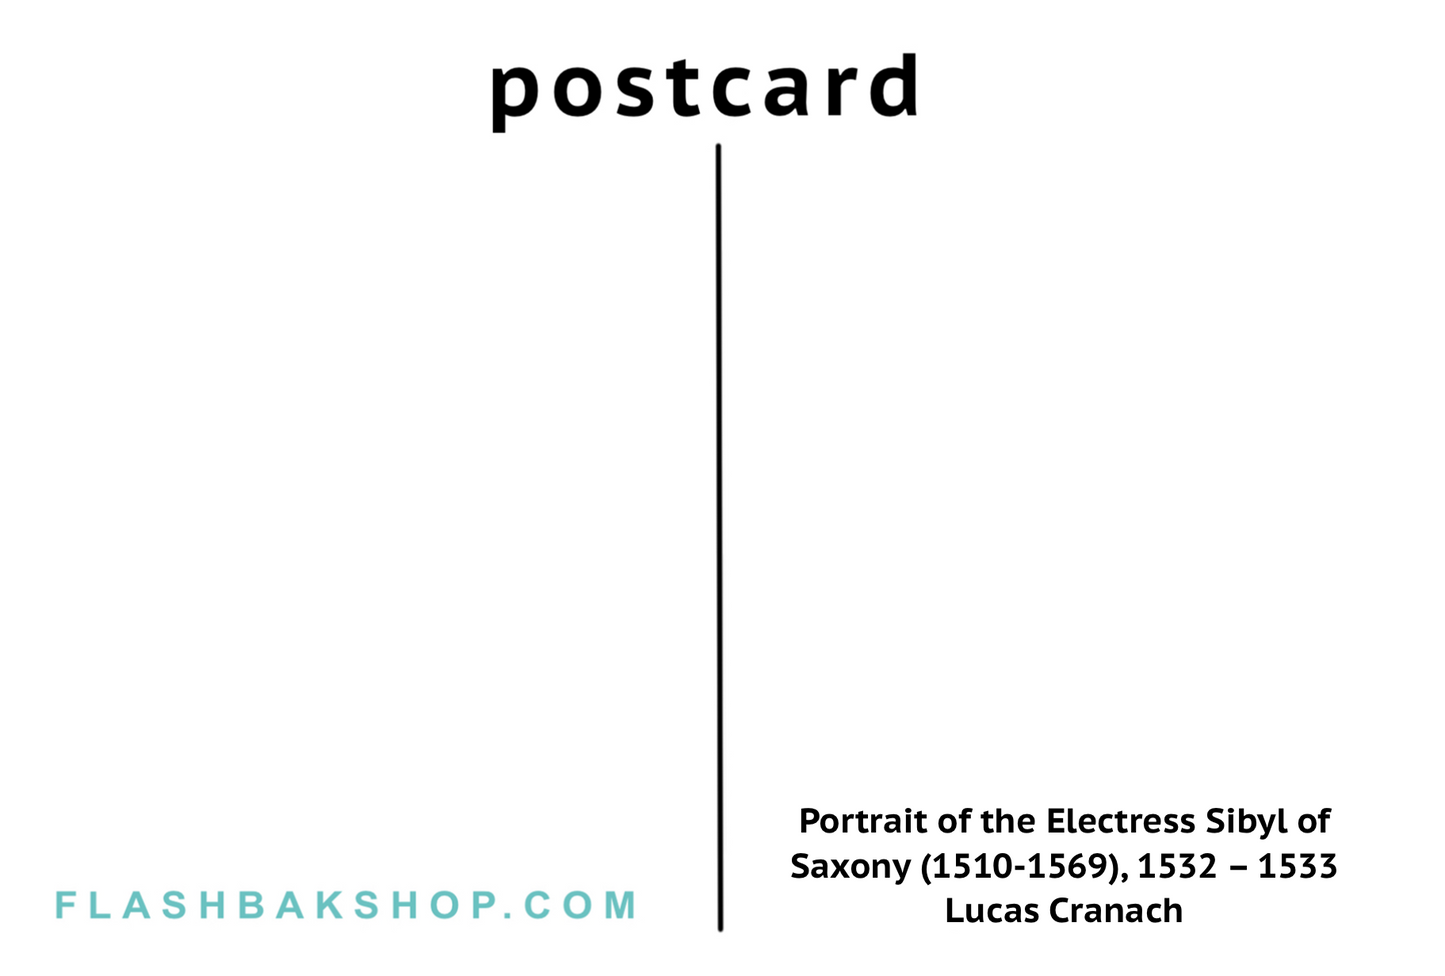 Portrait of the Electress Sibyl of Saxony by Lucas Cranach, 1933 - Postcard